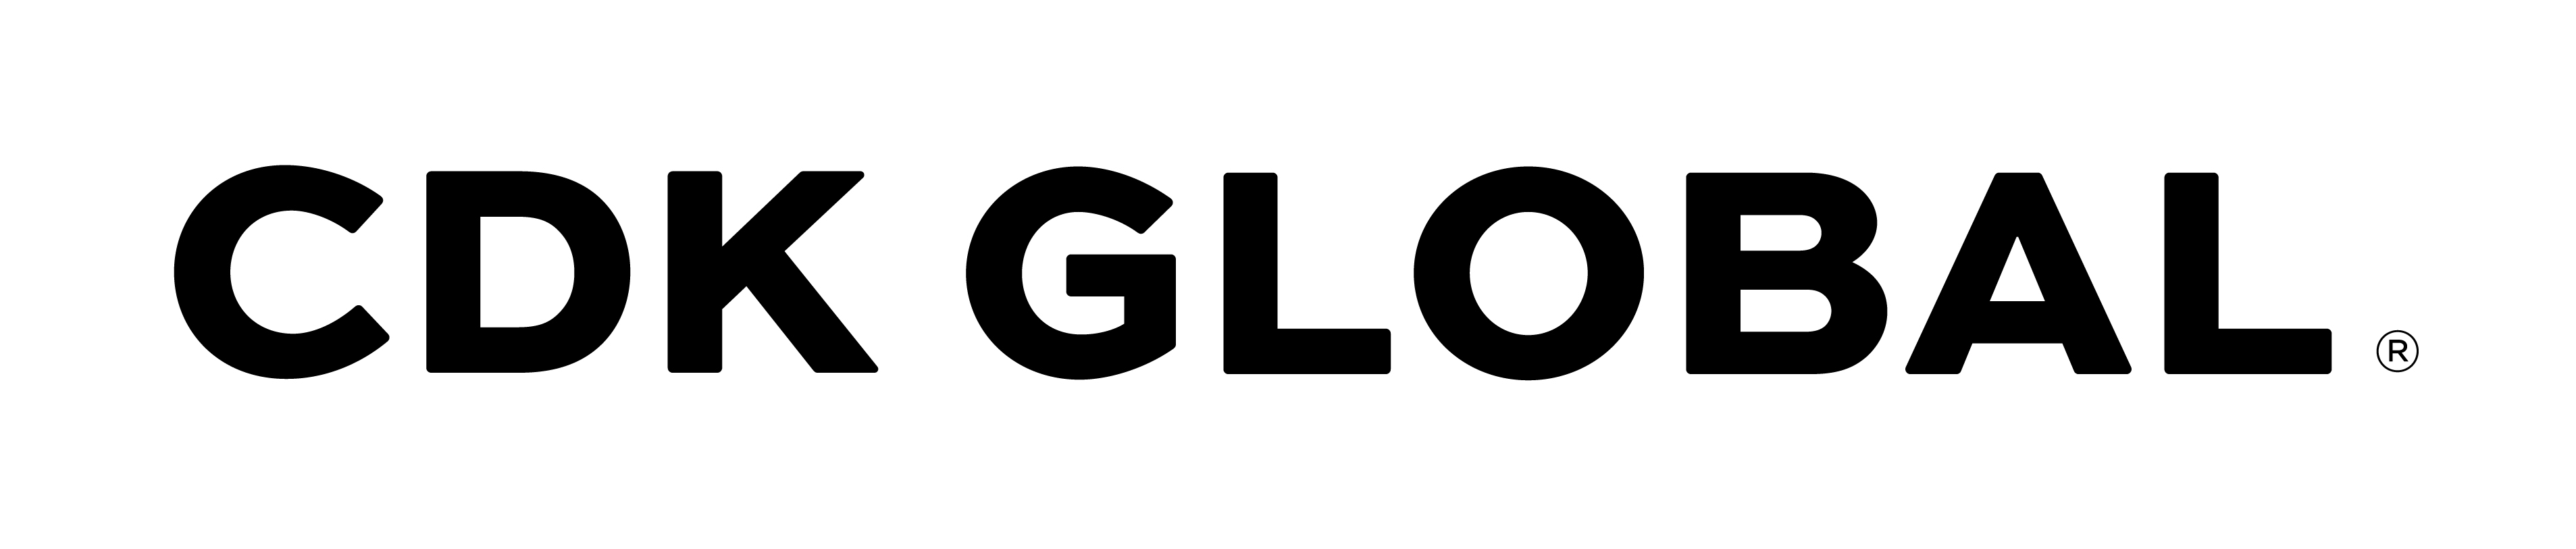 cdkglobal_wm_blk_New Logo.jpg